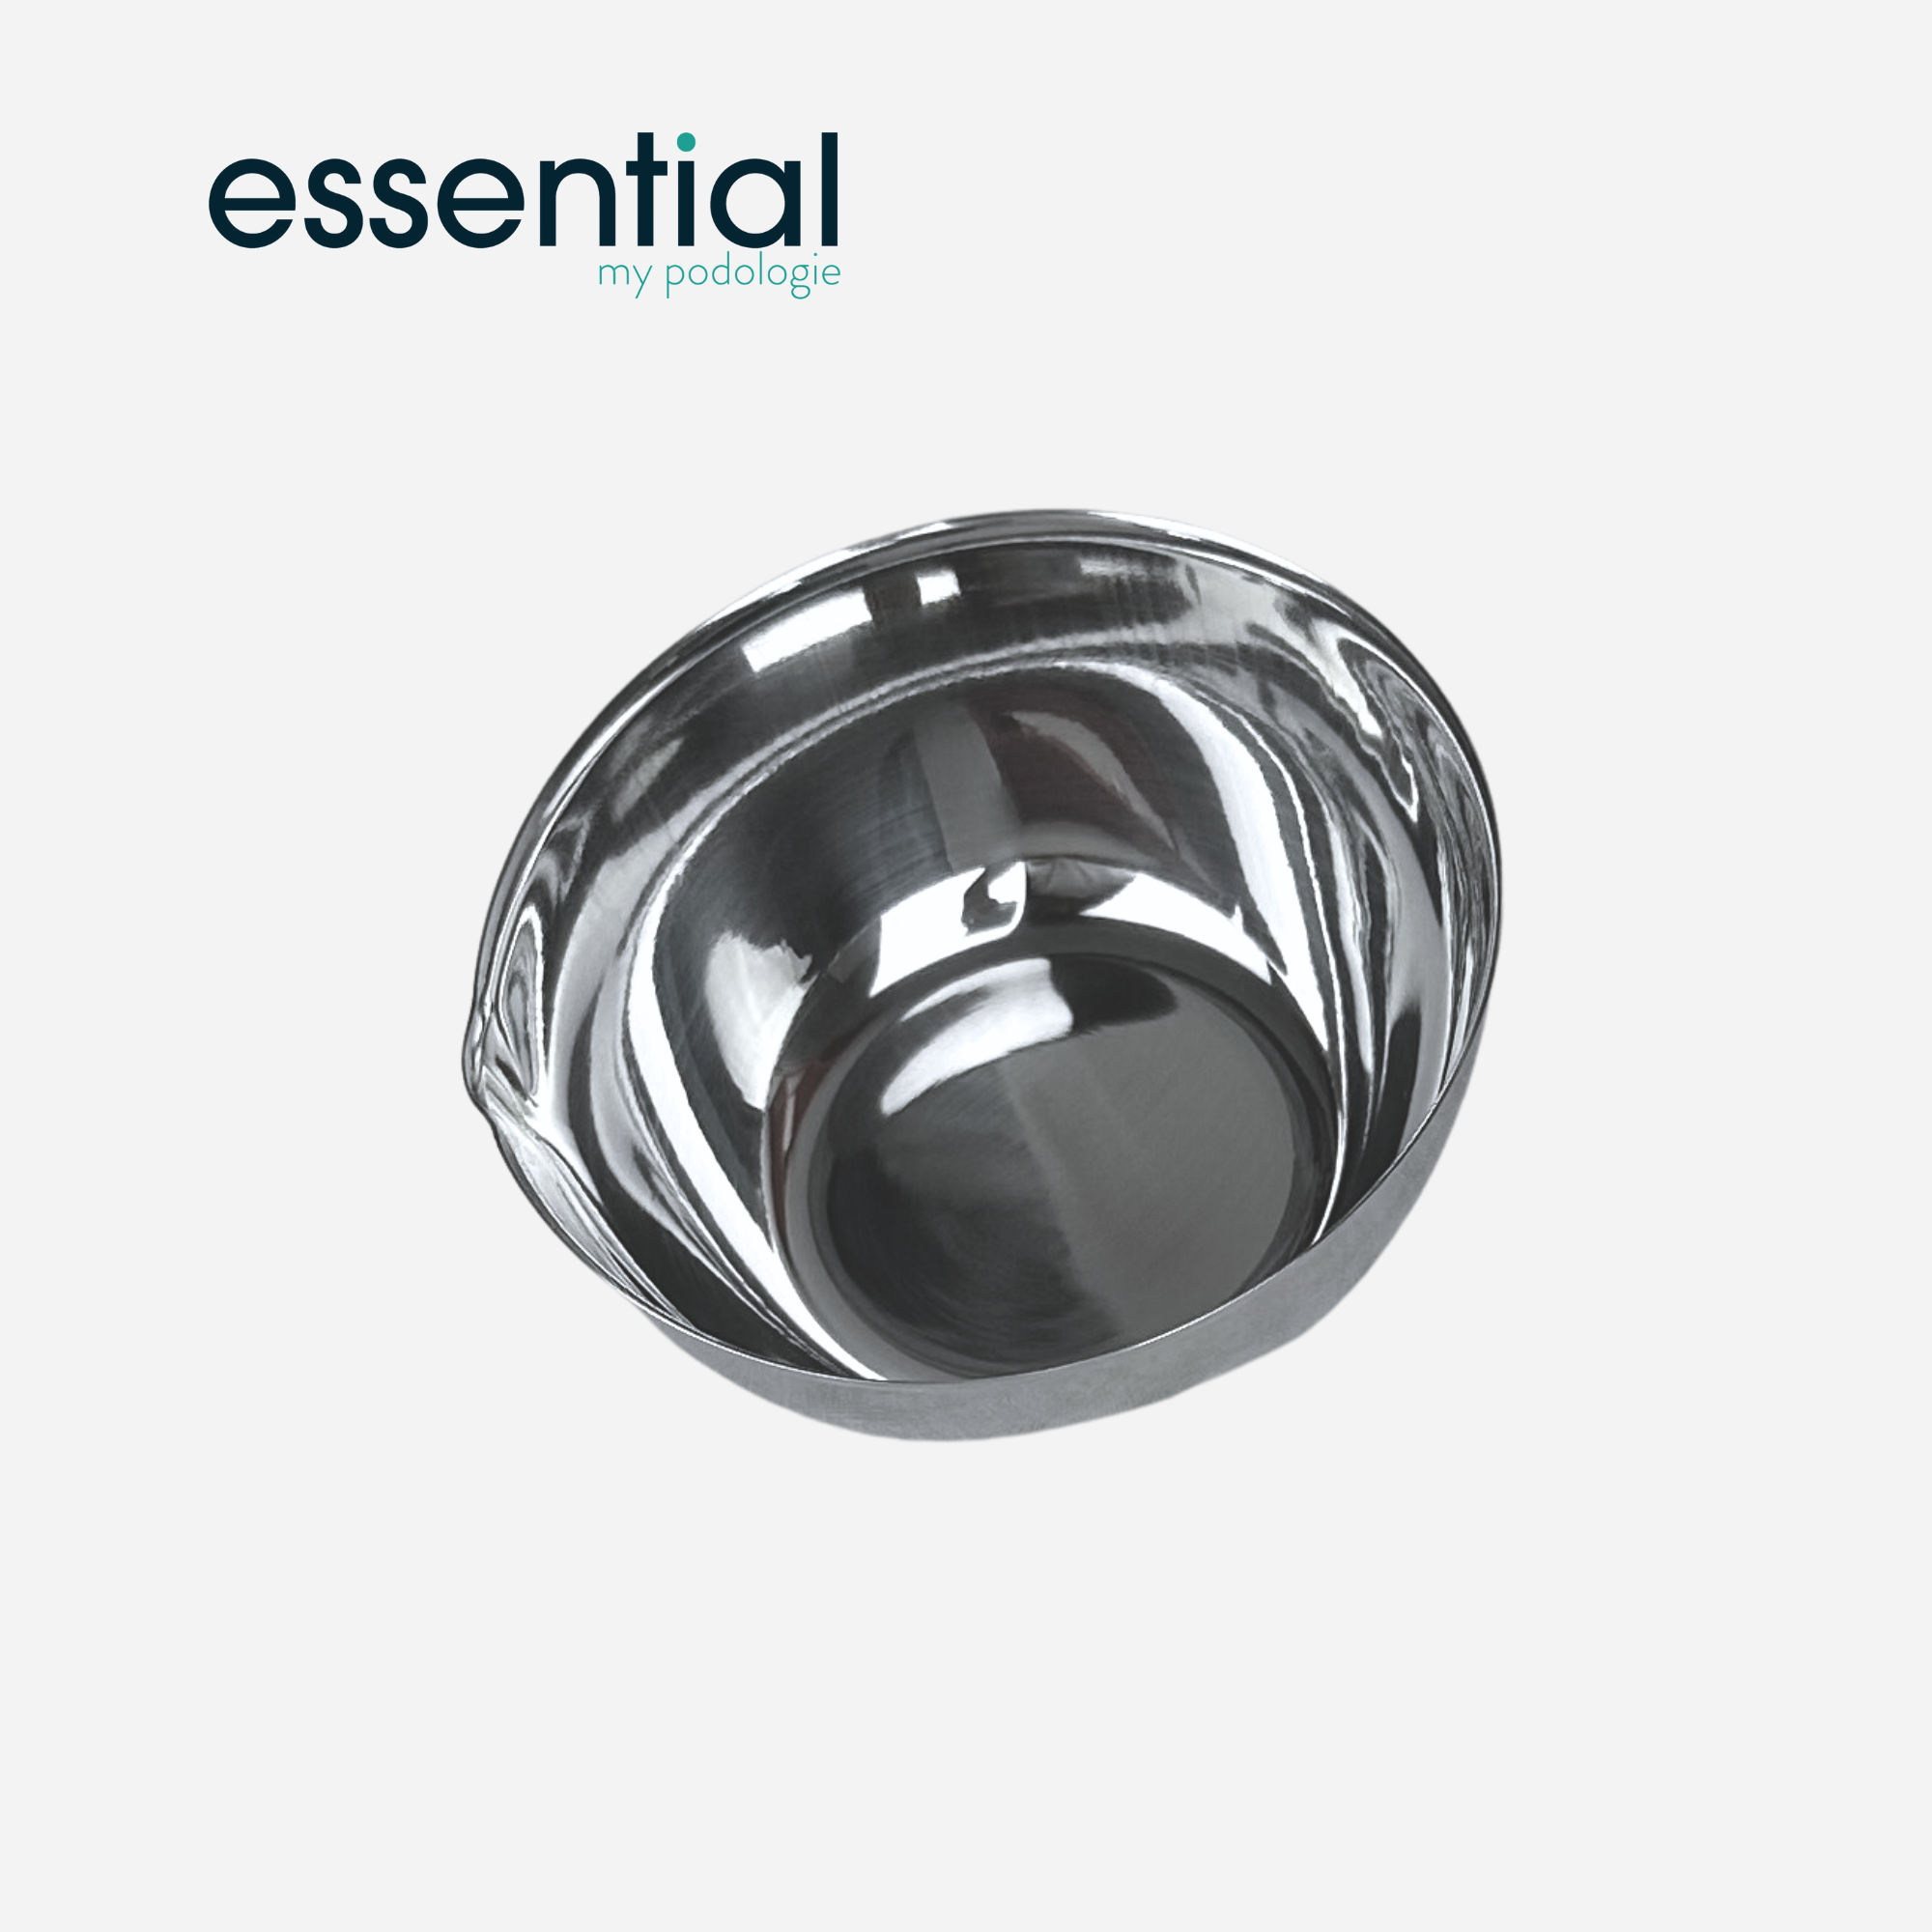 Cupule avec bec et fond plat - Inox - 6 dimensions - Essential by My Podologie Essential